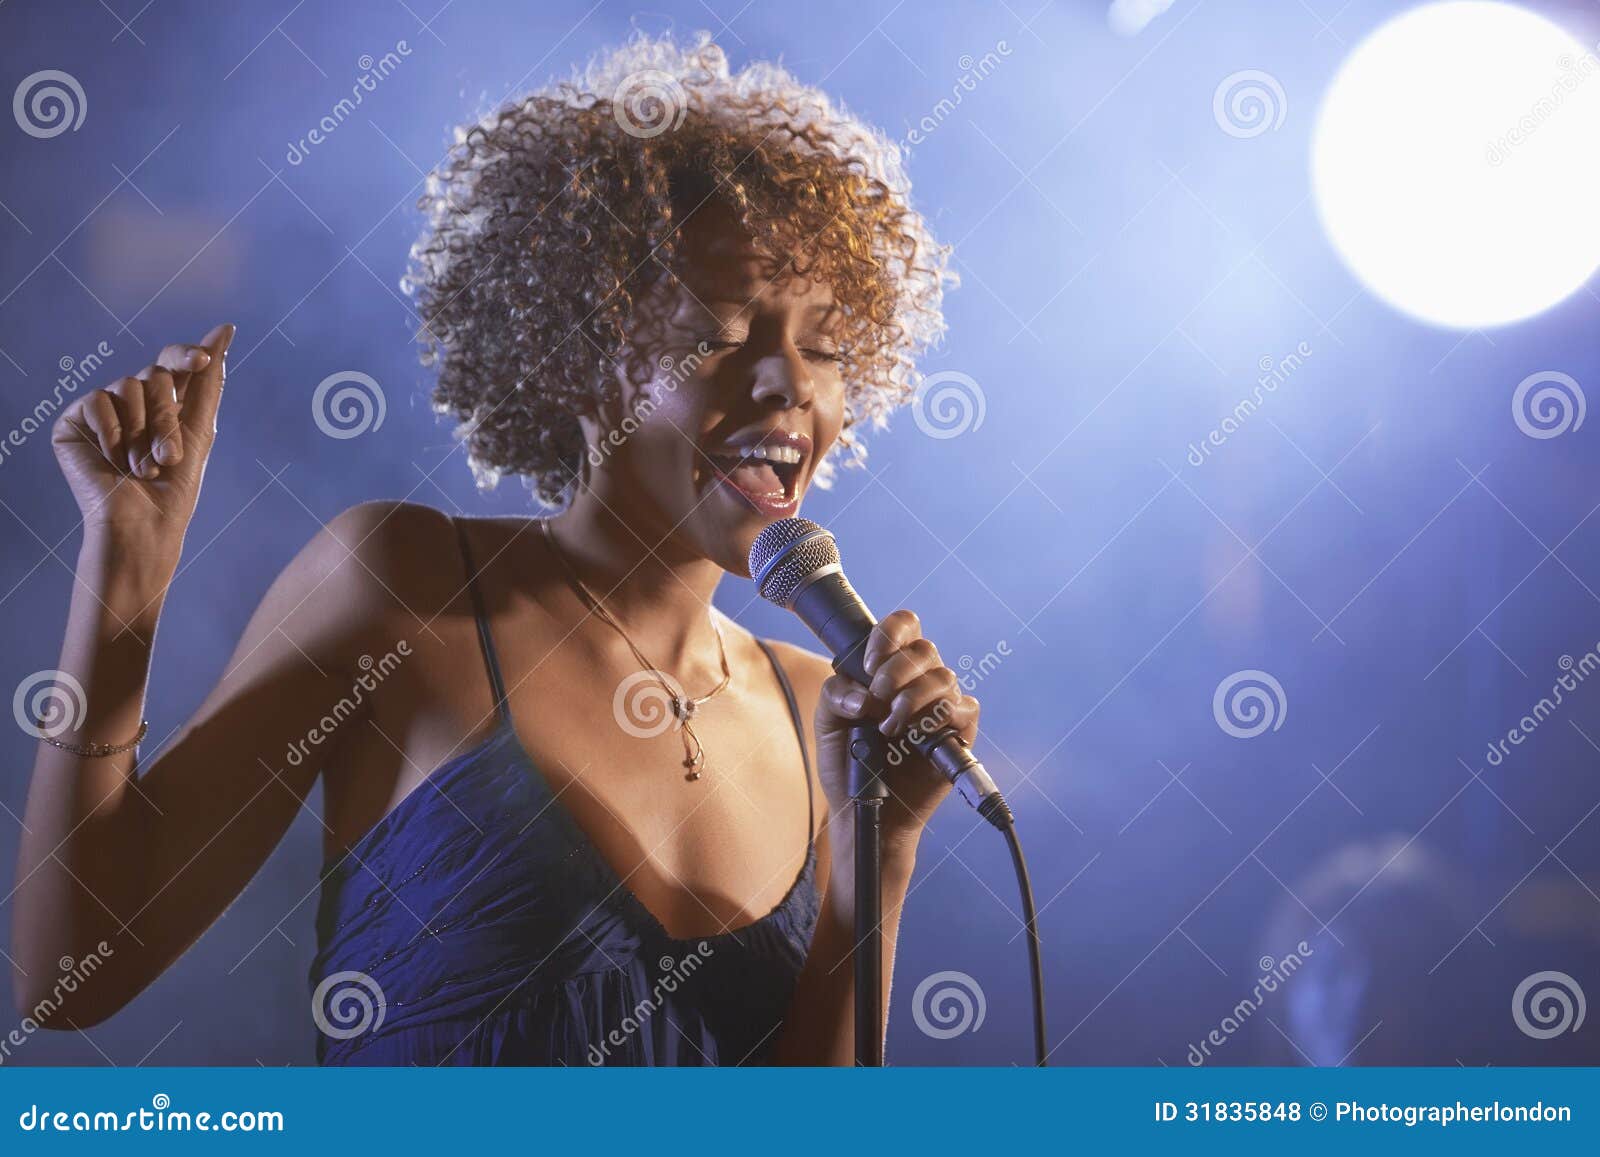 female jazz singer on stage